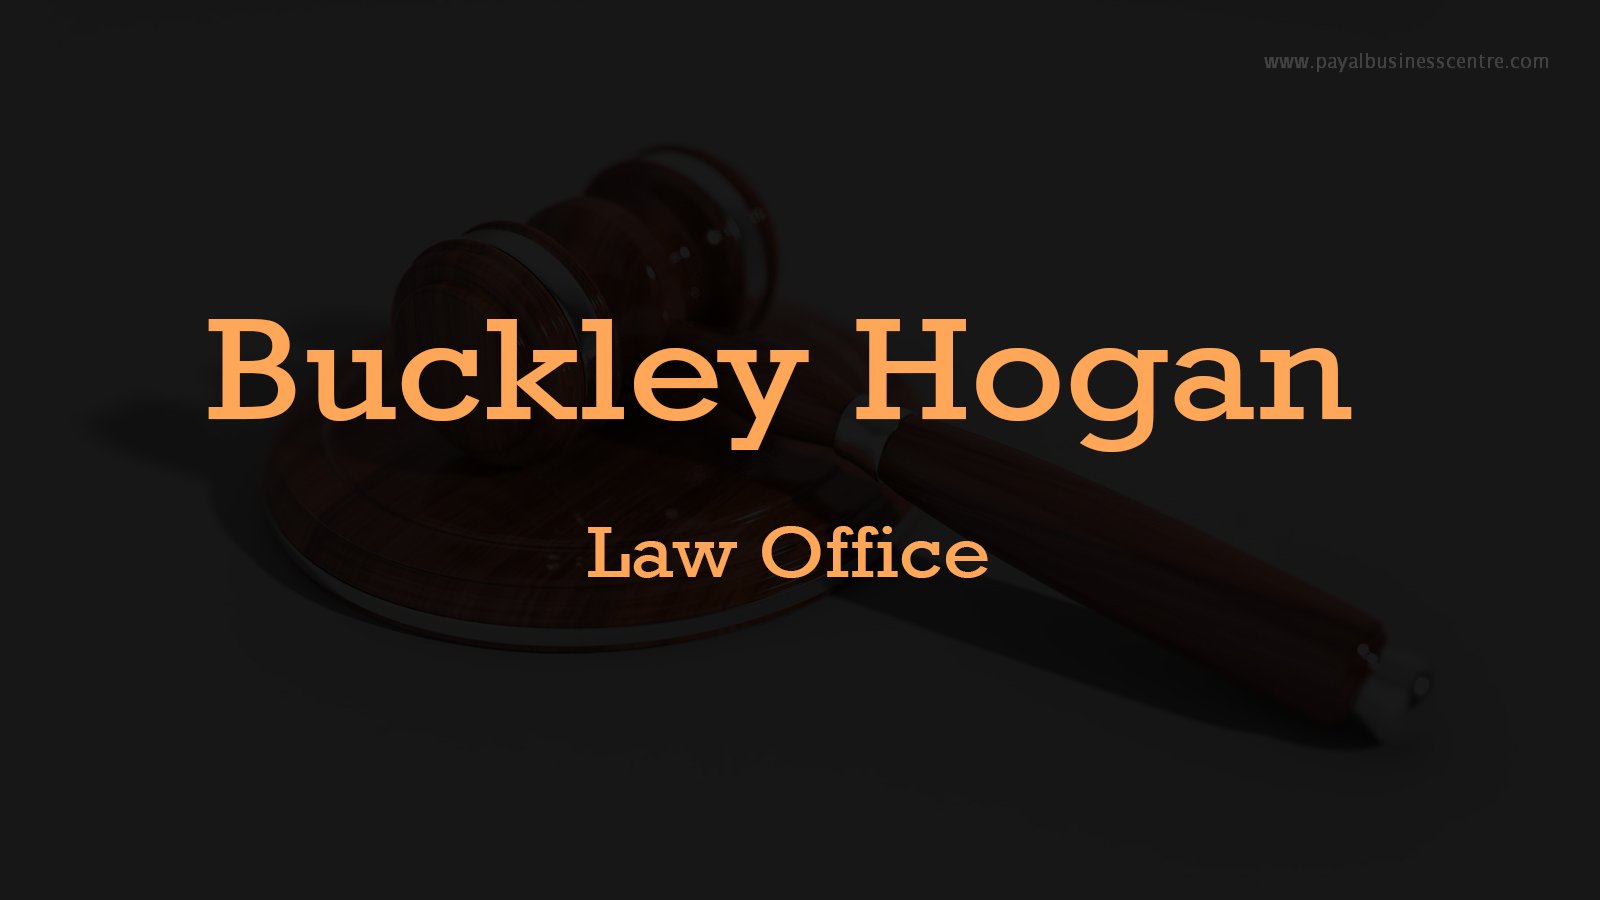 Buckley Hogan Law Office